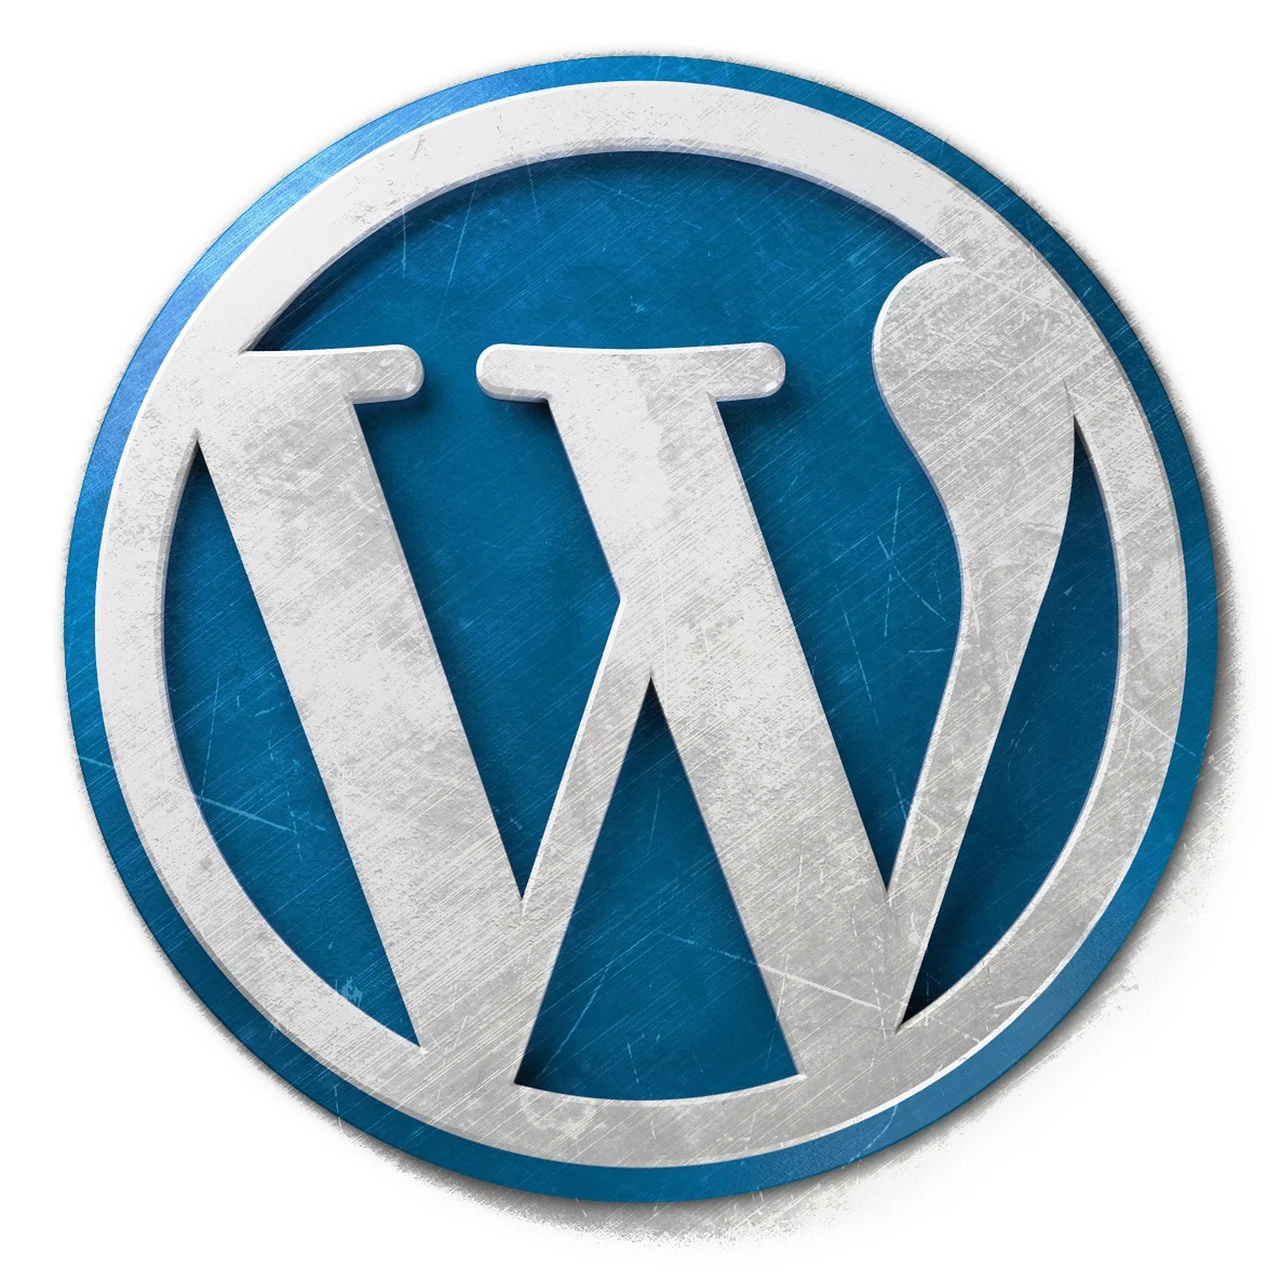 Création site internet WordPress